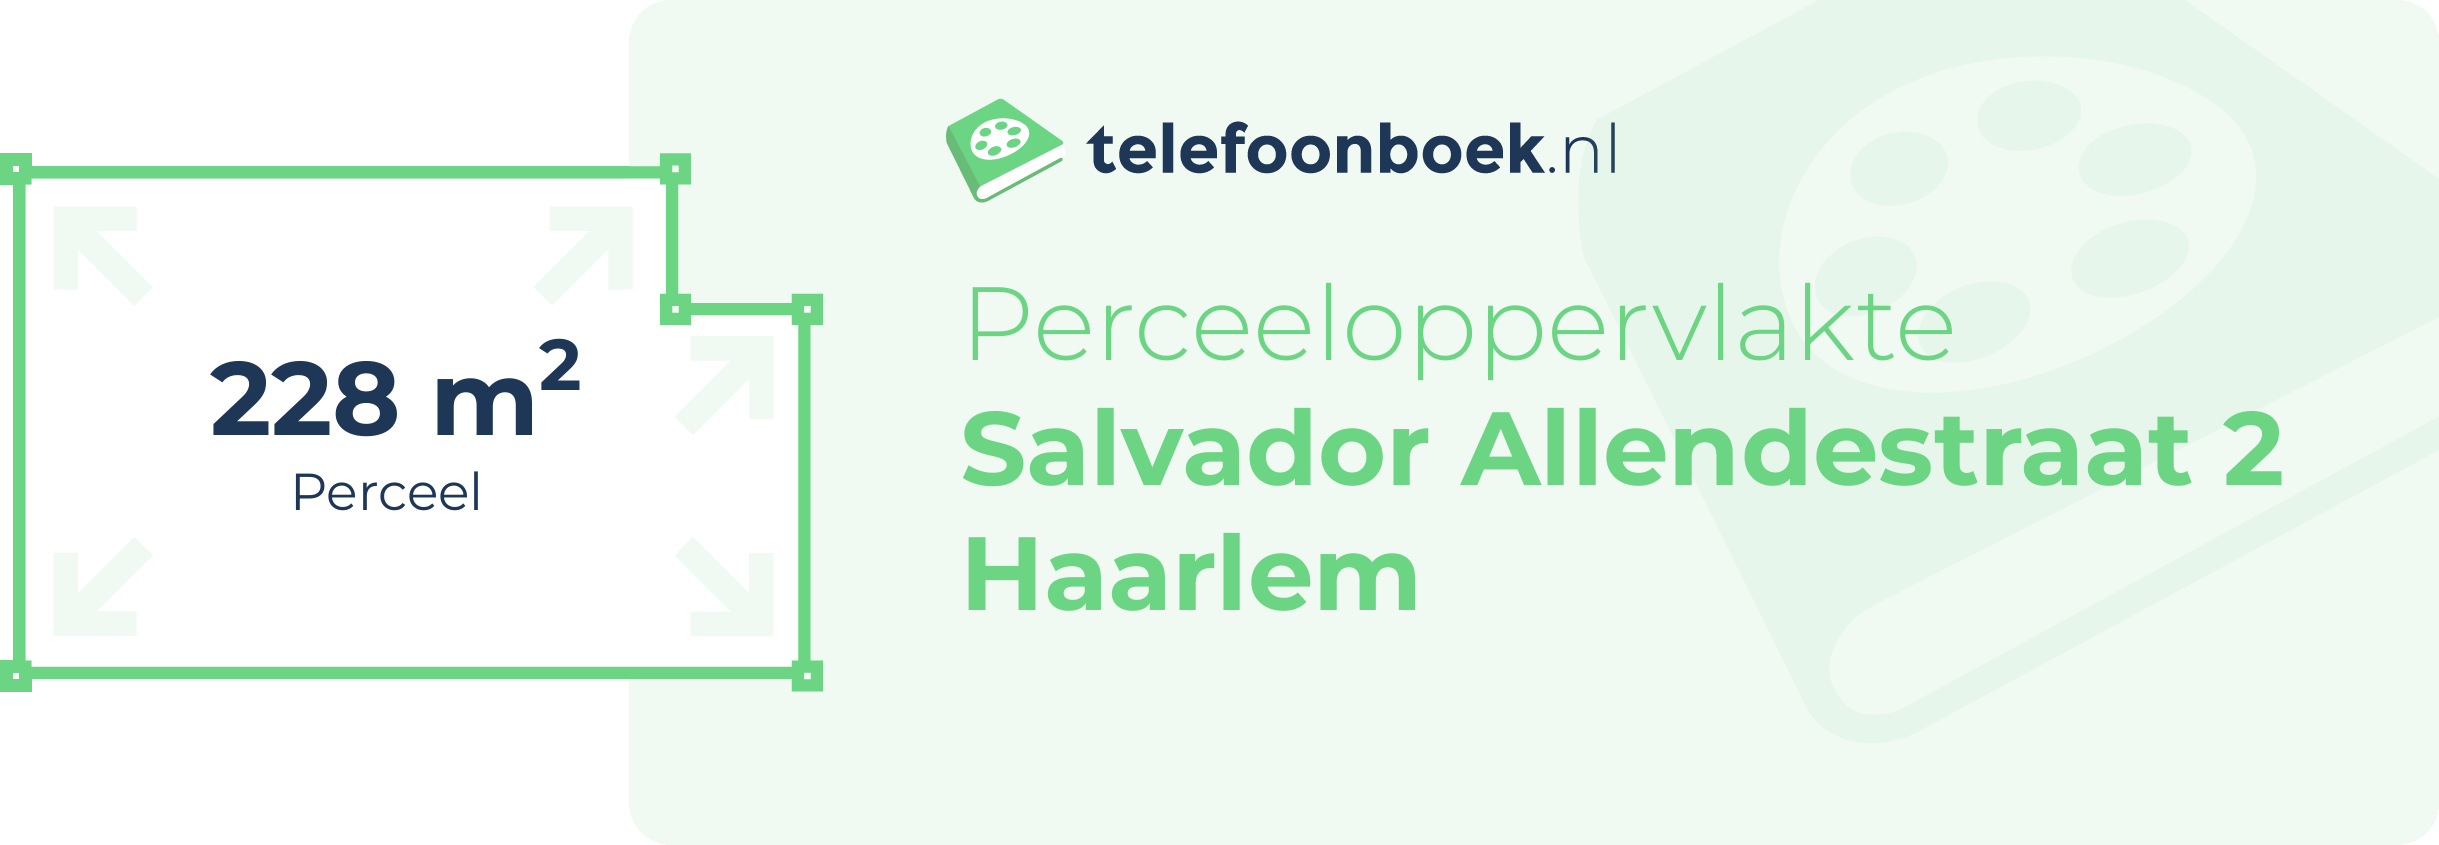 Perceeloppervlakte Salvador Allendestraat 2 Haarlem